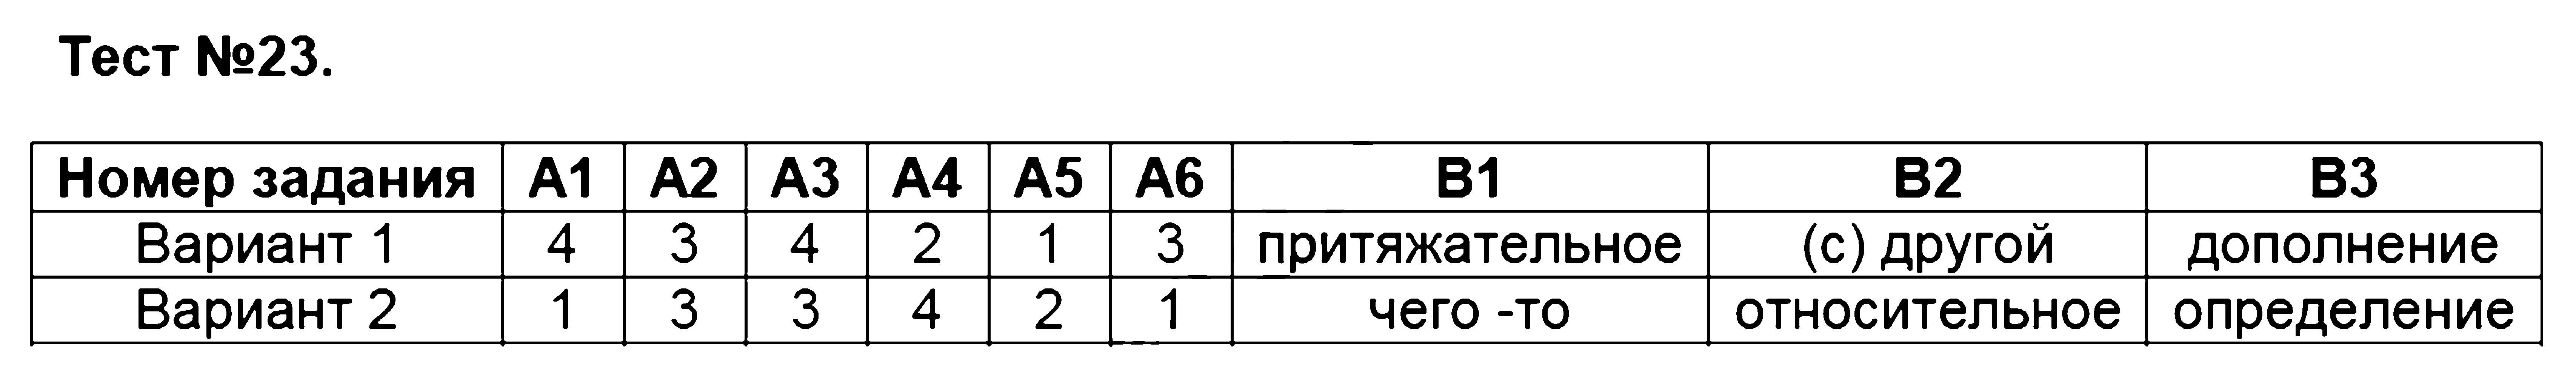 ГДЗ Русский язык 6 класс - Тест 23